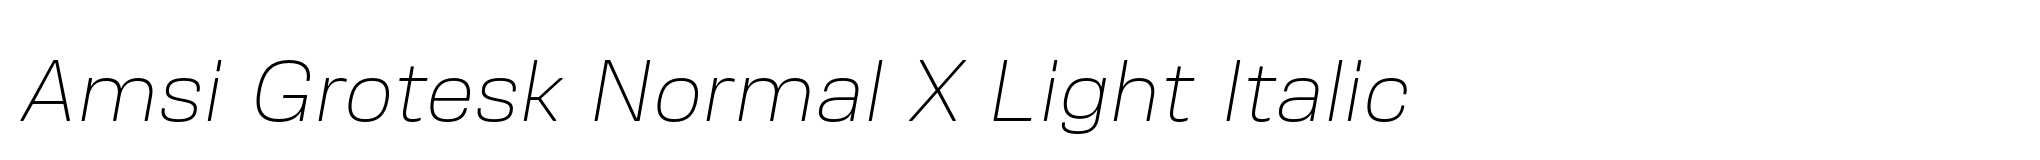 Amsi Grotesk Normal X Light Italic image